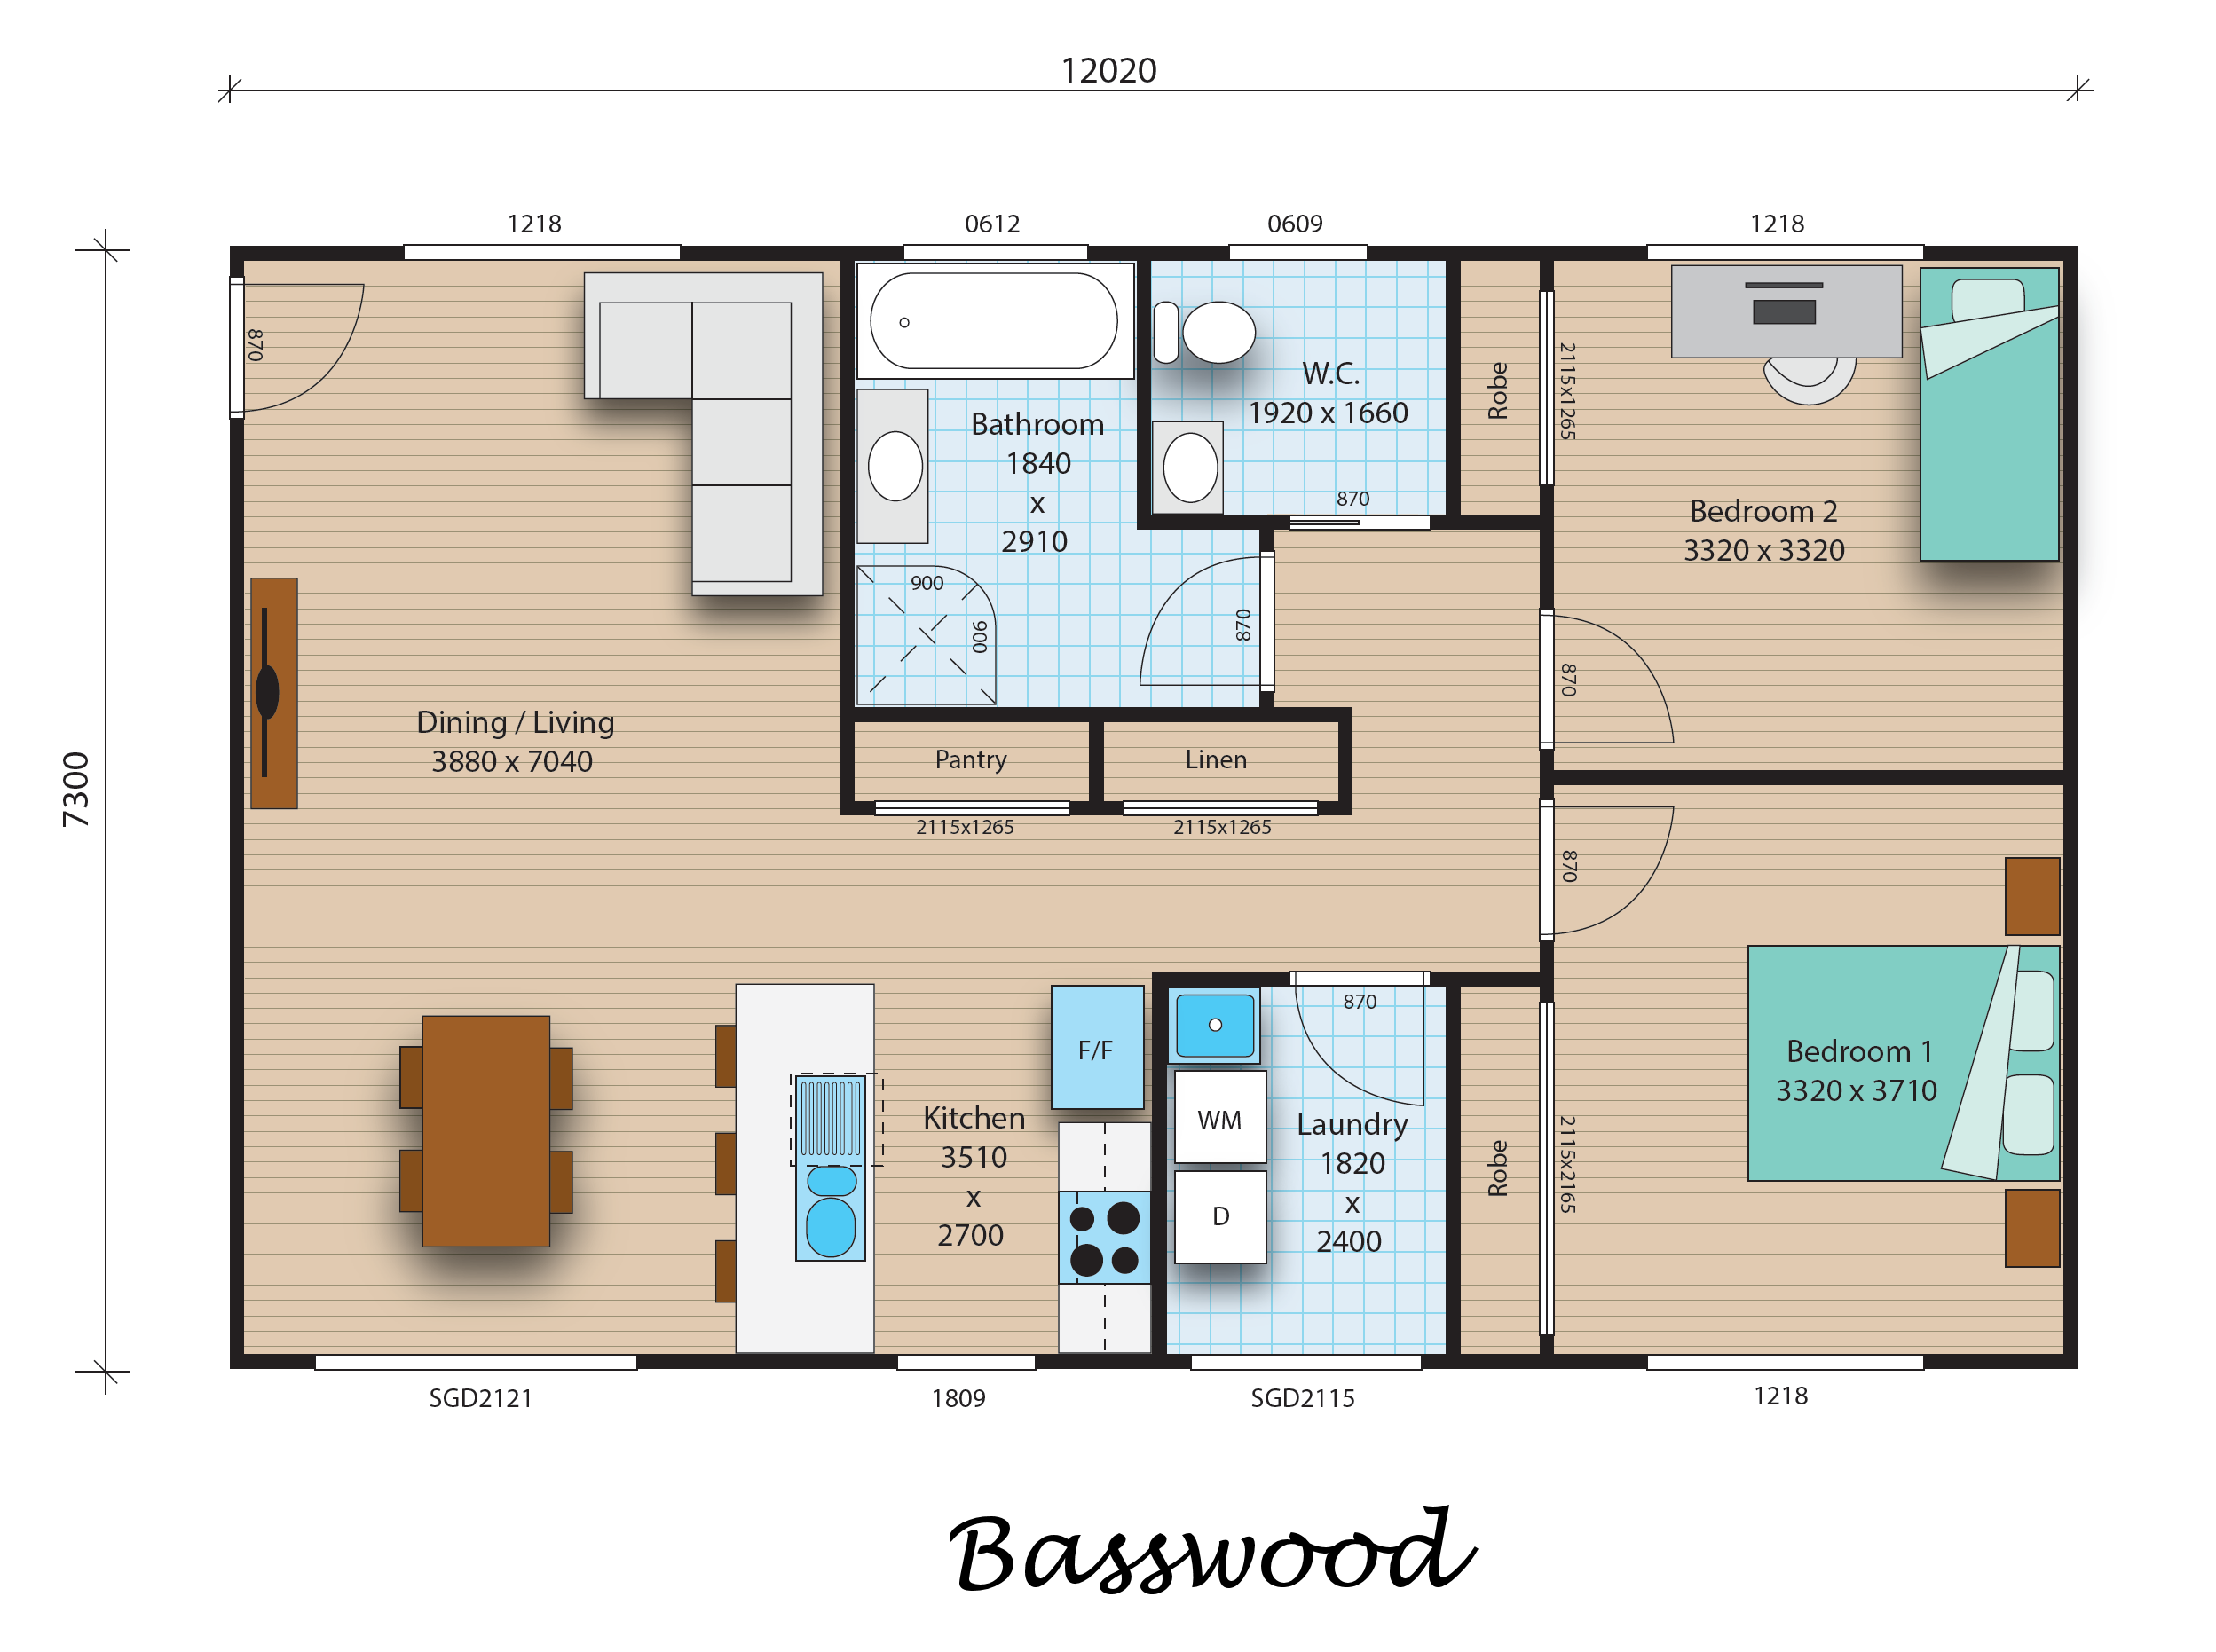 Basswood floorplan image